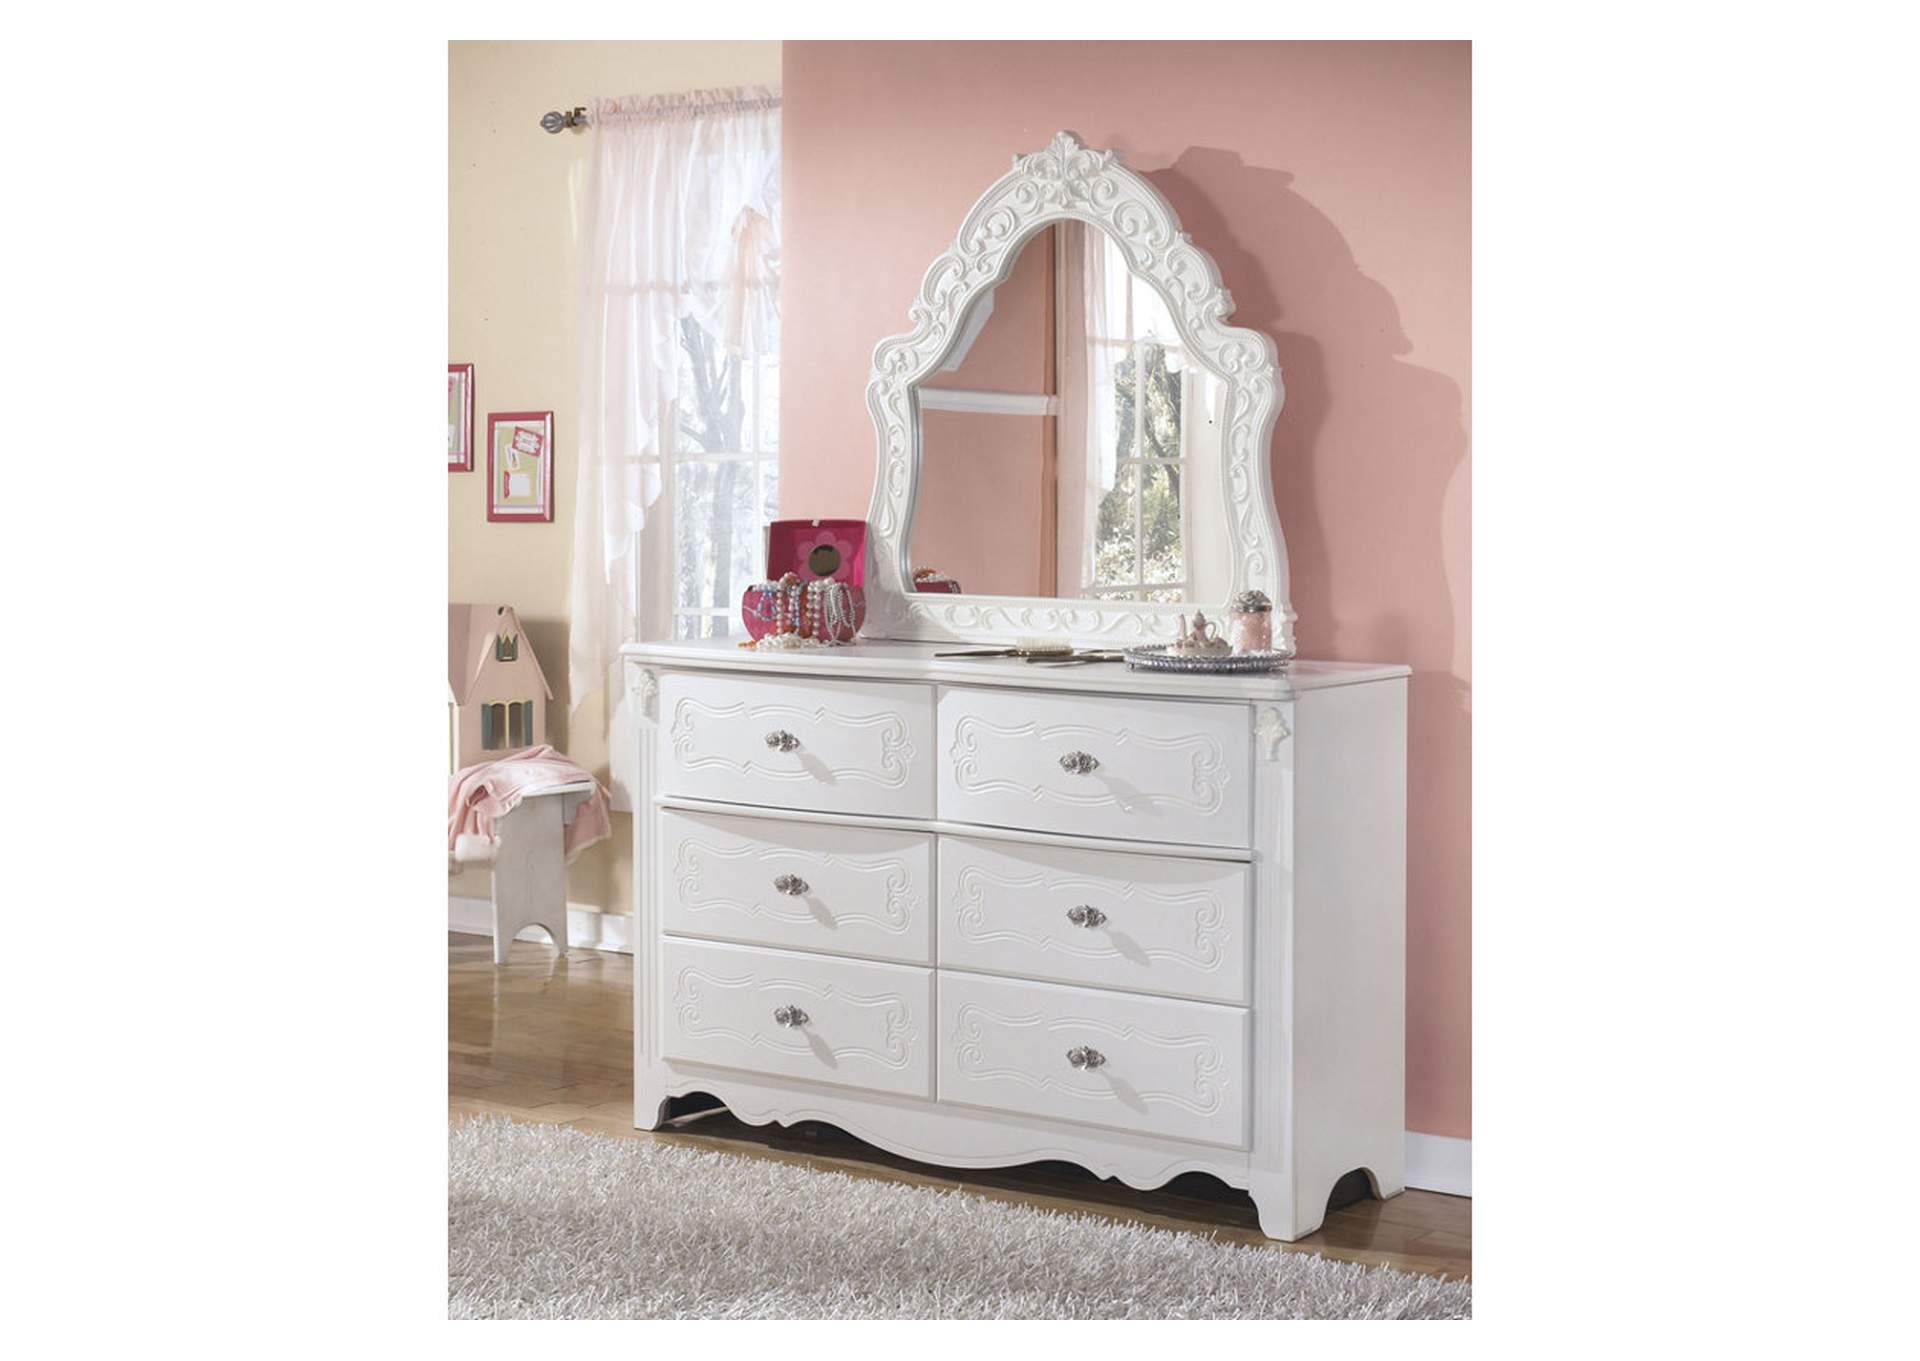 Exquisite Dresser and Mirror,Signature Design By Ashley